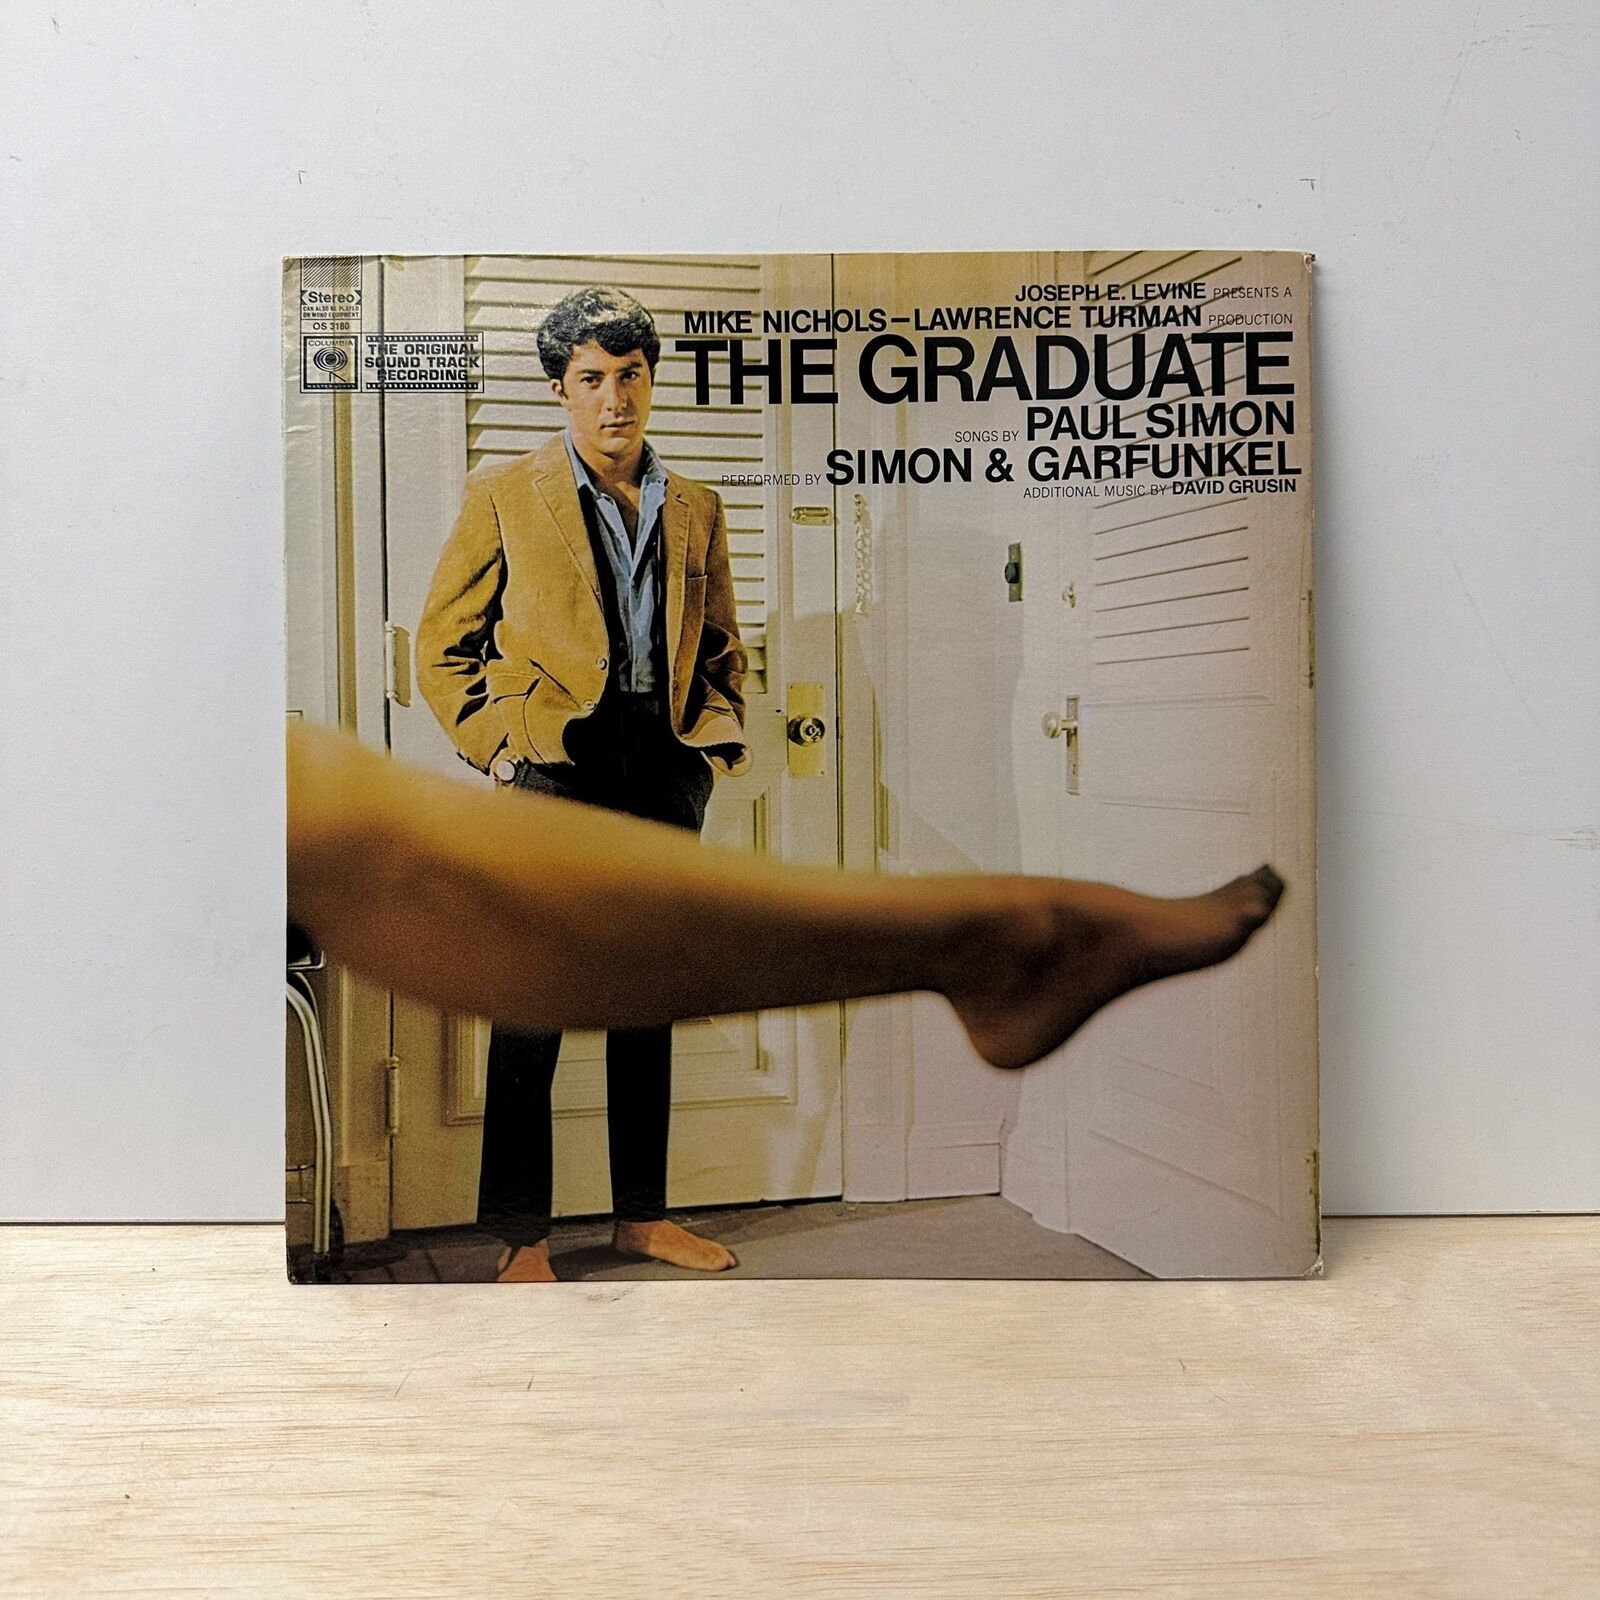 The Graduate (Original Sound Track Recording) - Vinyl LP Record - 1968